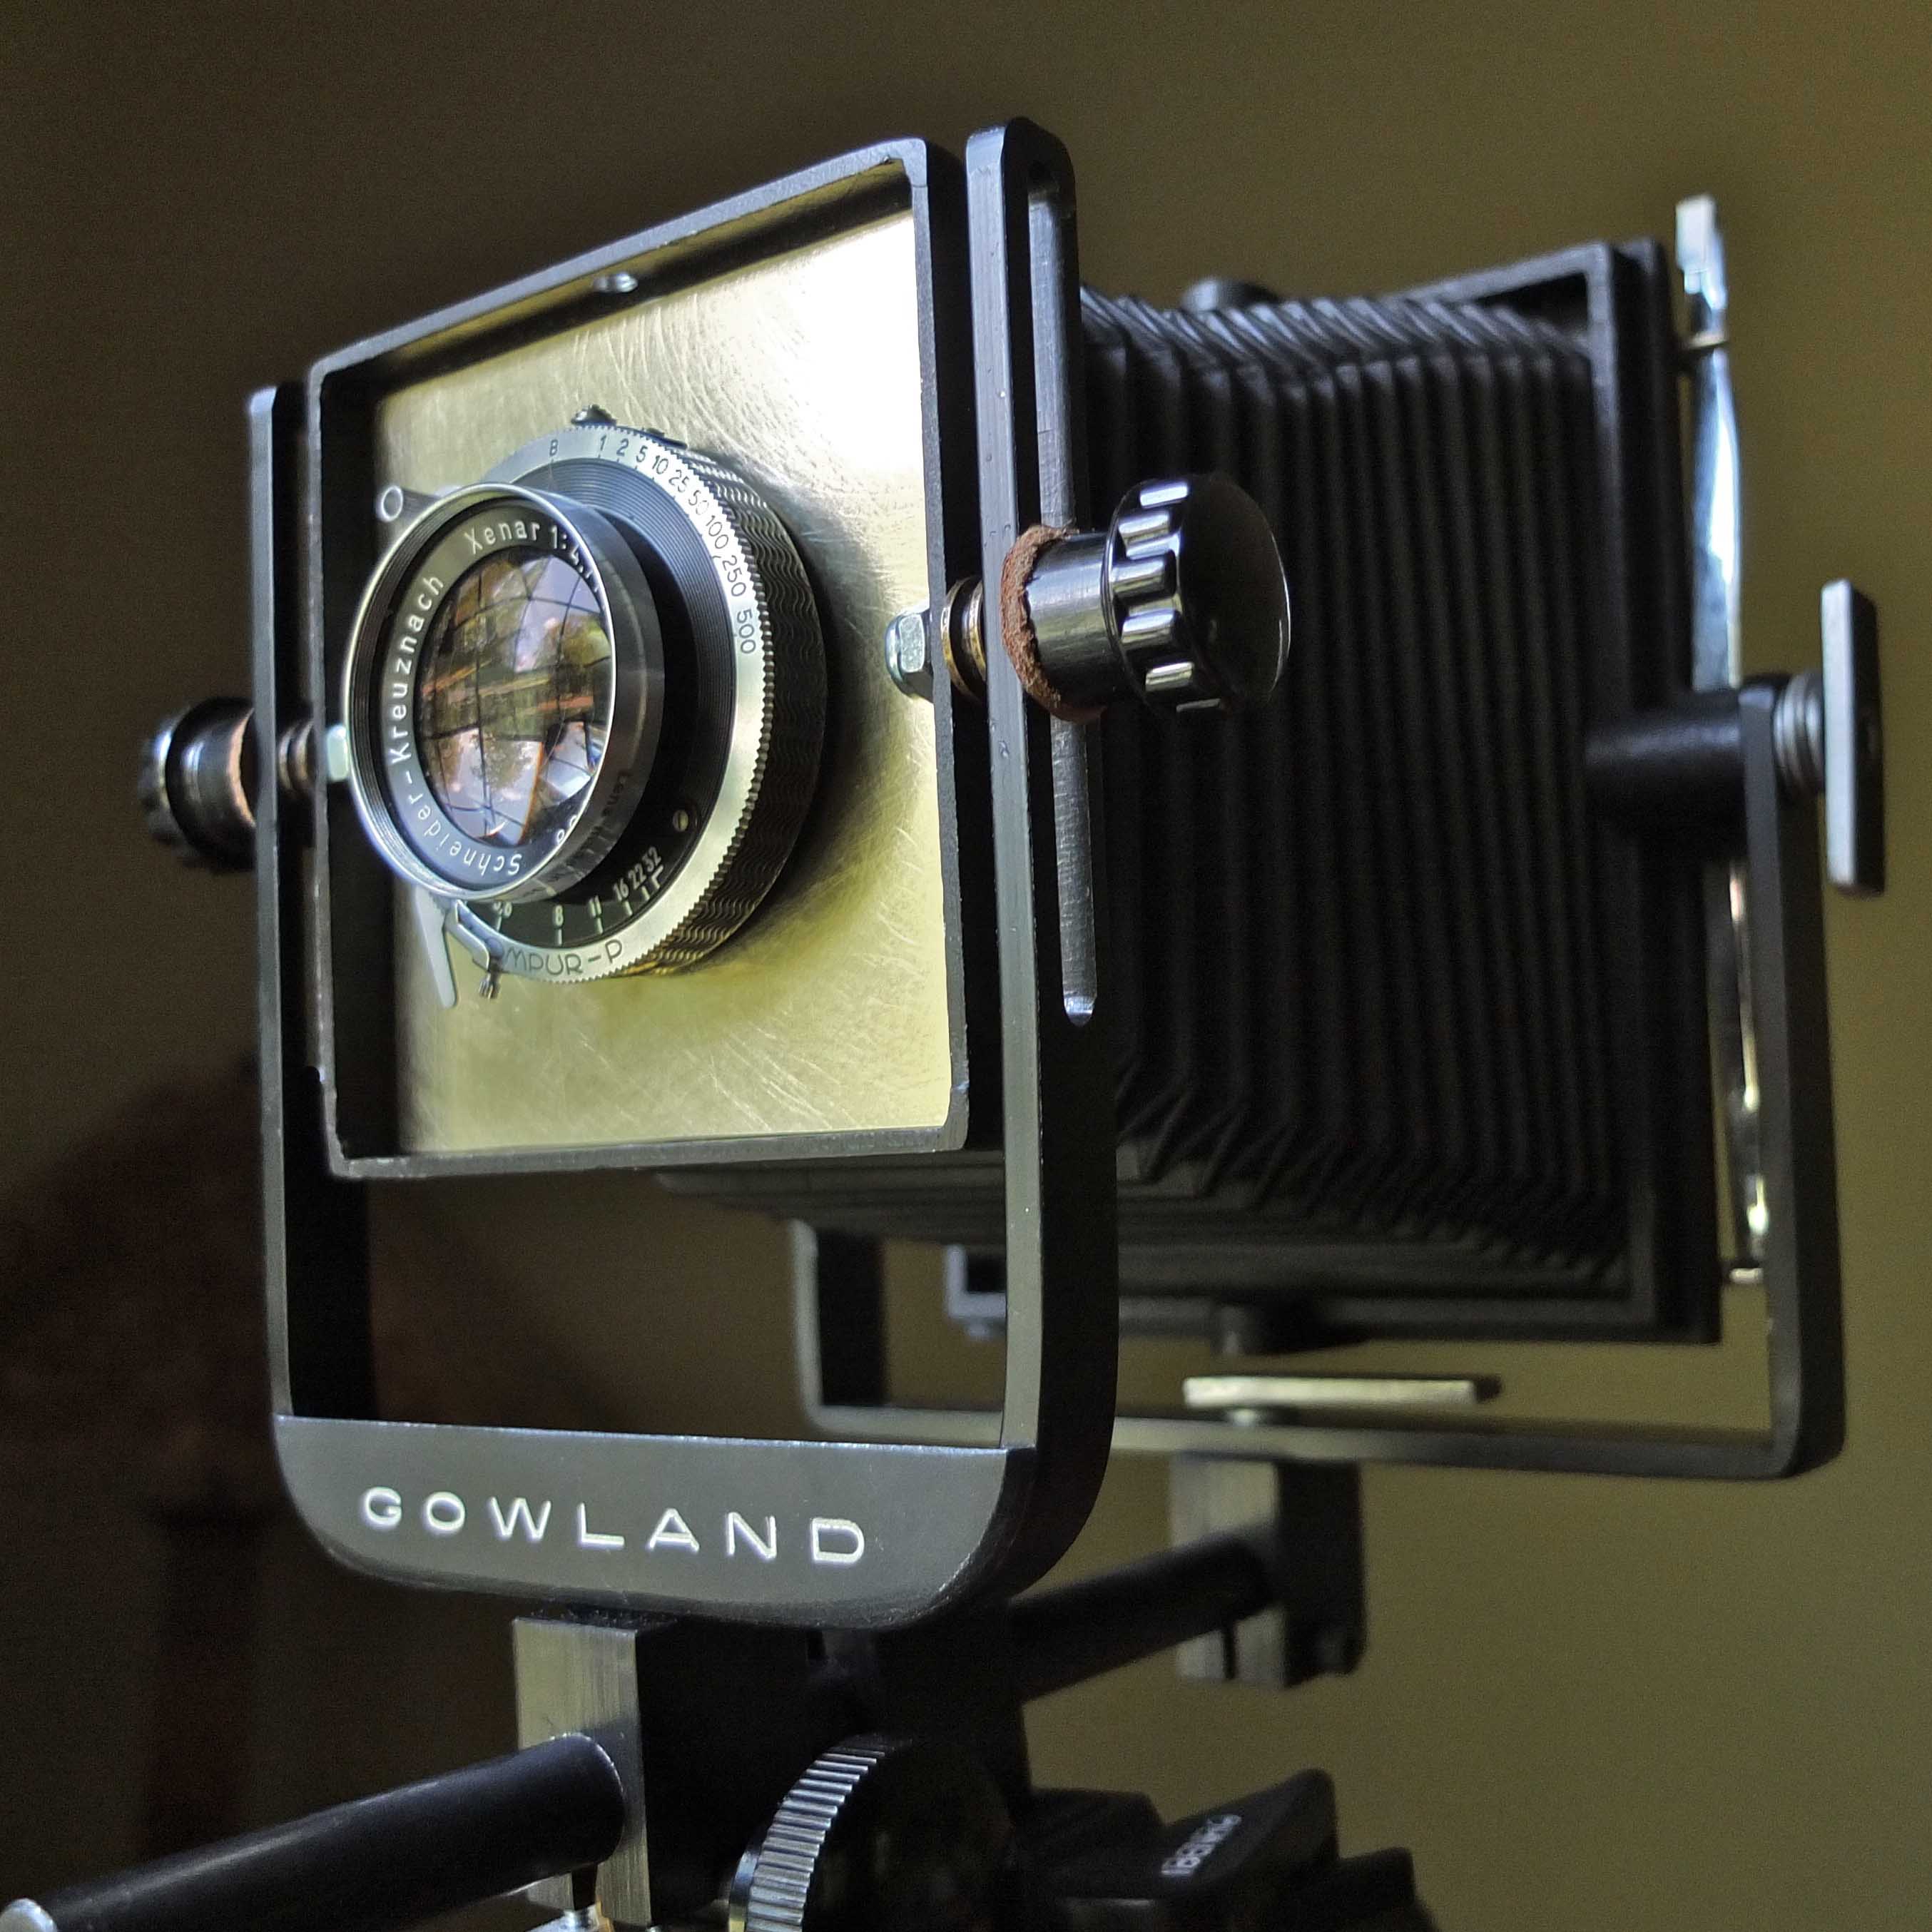 Gowland Pocket View camera with Schneider-Kreuznach Xenar lens